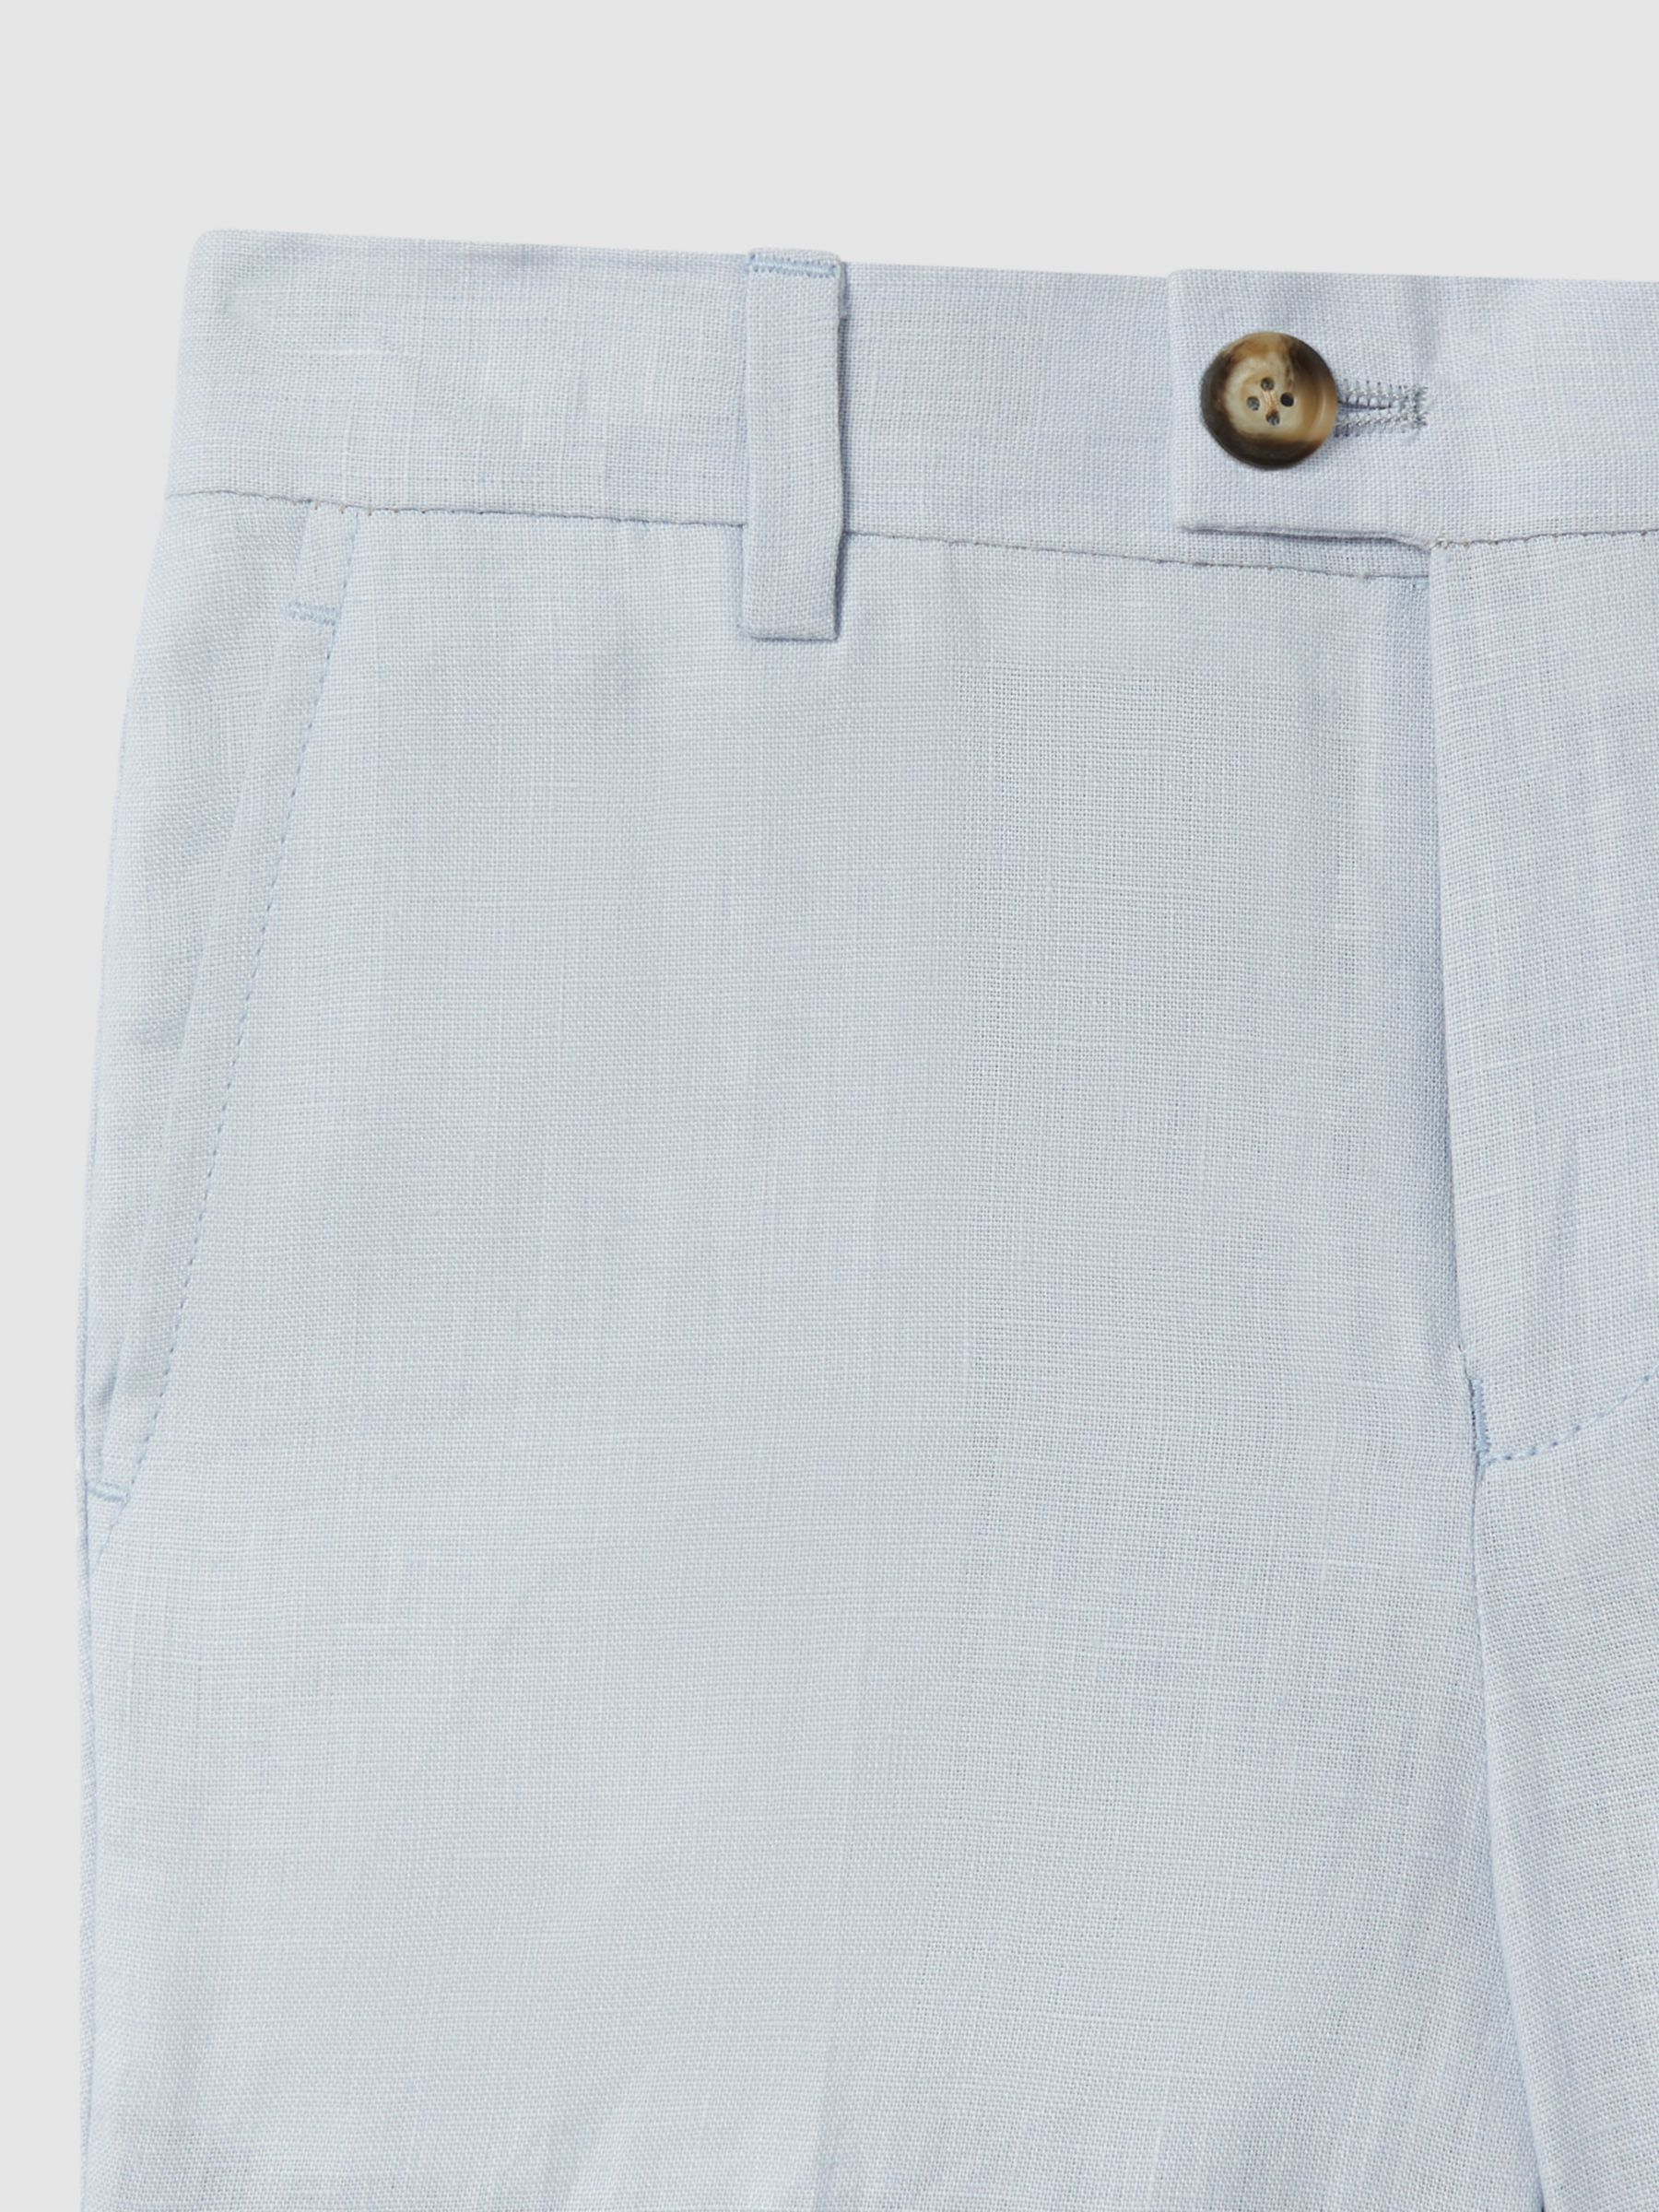 Reiss Kids' Kin Linen Suit Shorts, Soft Blue, 7-8 years